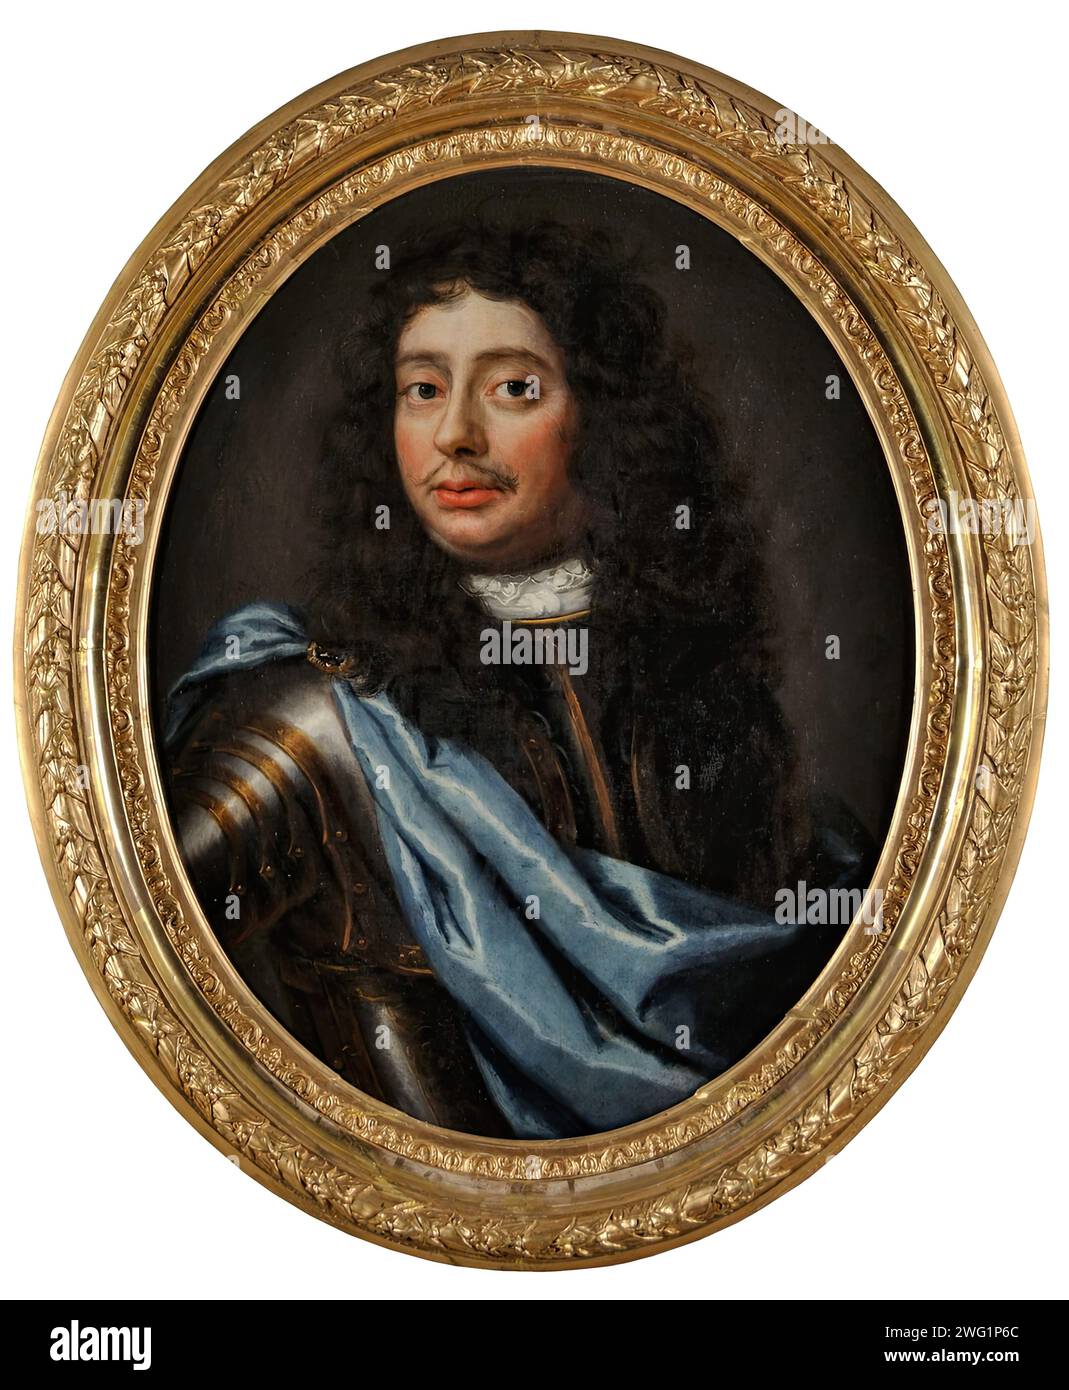 Malcolm Hamilton of Hageby, 1682. Oval bust, portrait of Malcolm Hamilton of Hageby with dark long wig. Wearing armor with draped blue cloth. Stock Photo